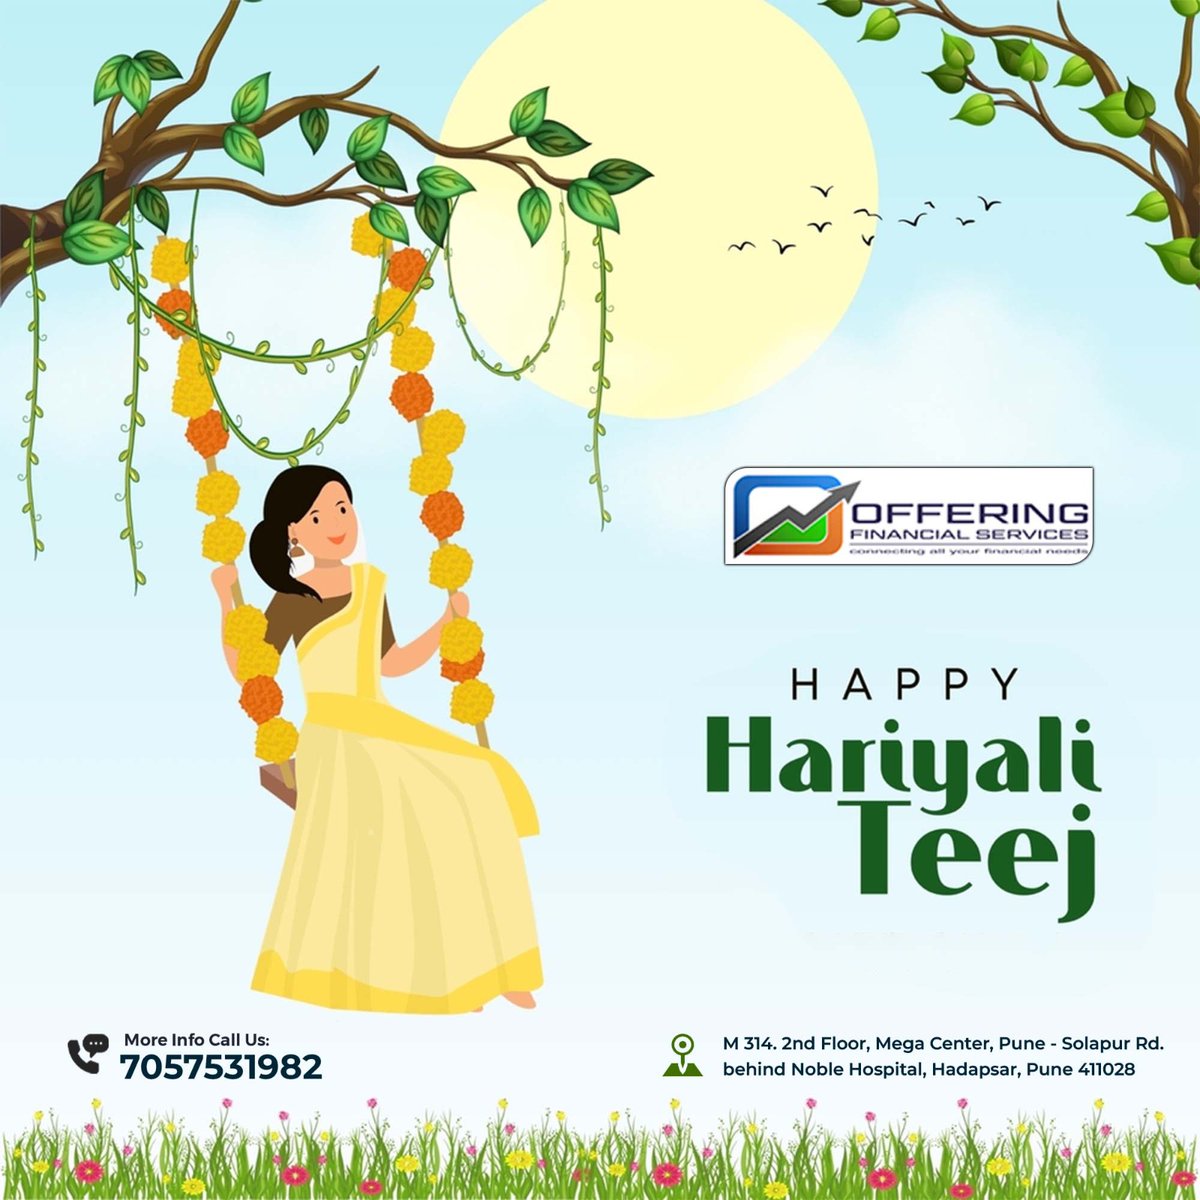 Embracing the vibrant greenery and celebrating love on Hariyali Teej! 🌿💚💫

#HariyaliTeej #GreenFestival #LoveAndTradition #TraditionalJoy #TeejVibes #TeejSpecial #IndianFestival #FestiveSeason #CelebratingHappiness